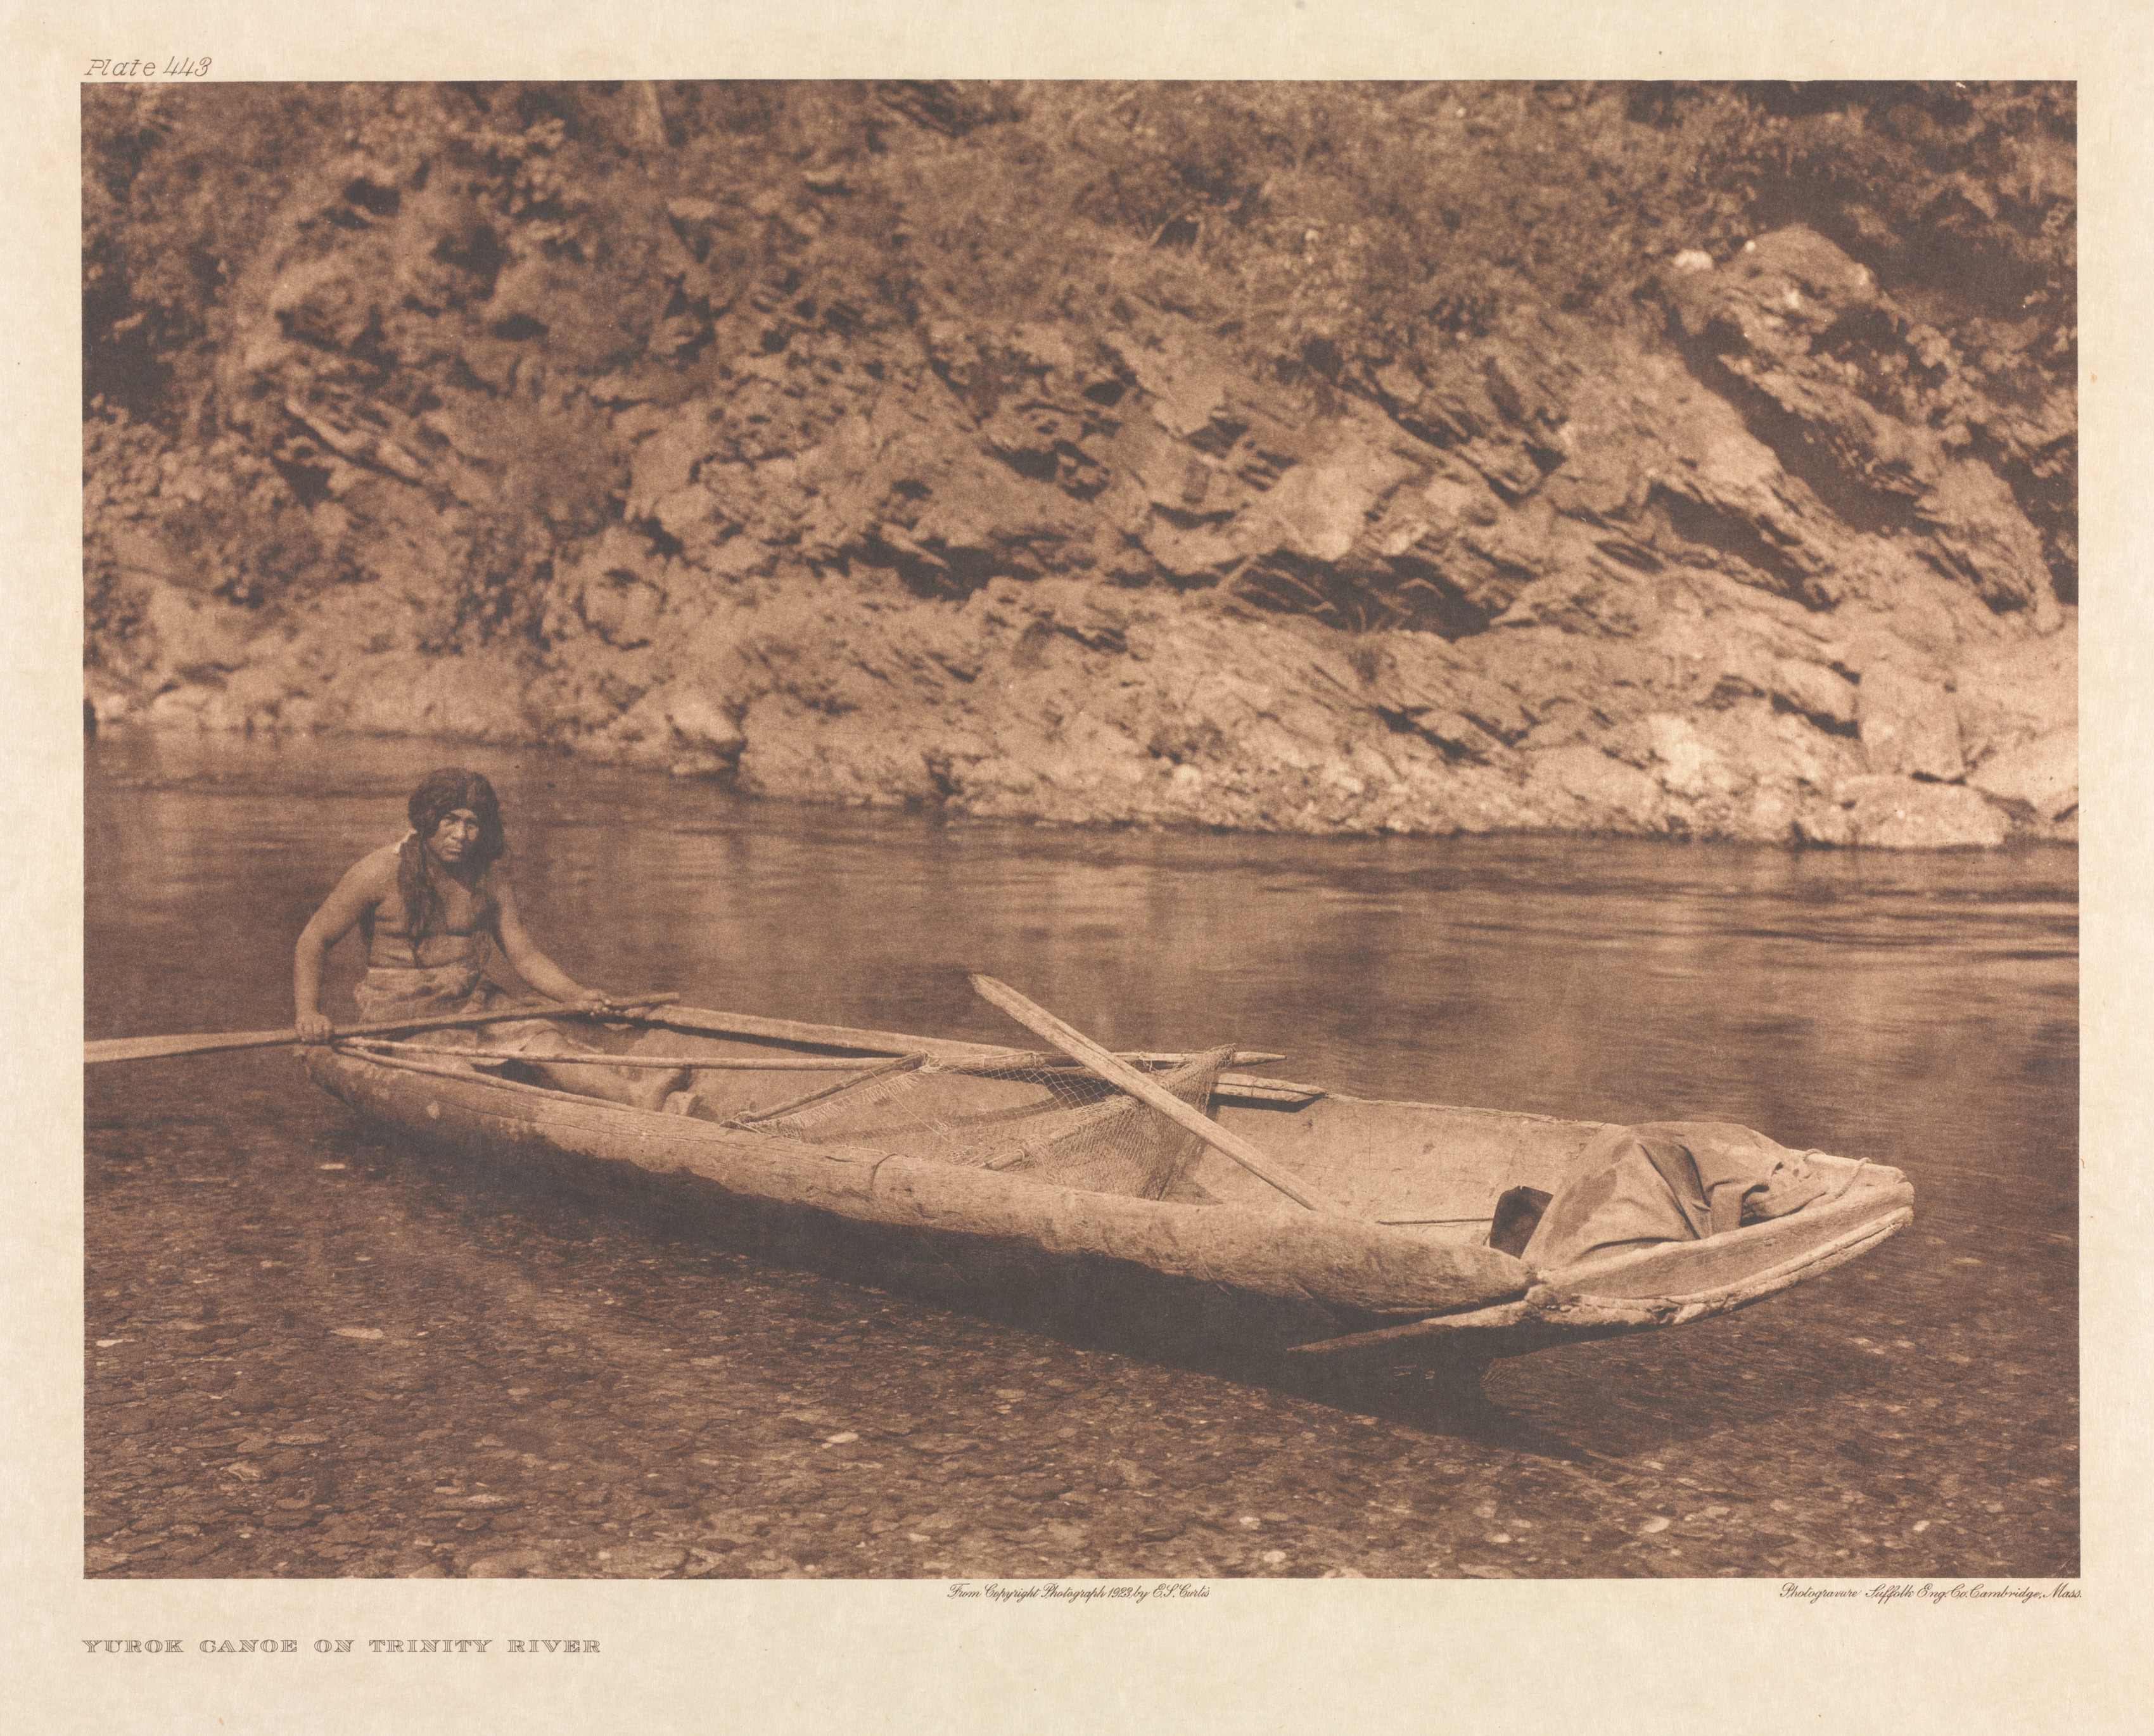 Portfolio XIII, Plate 443: Yurok Canoe on Trinity River